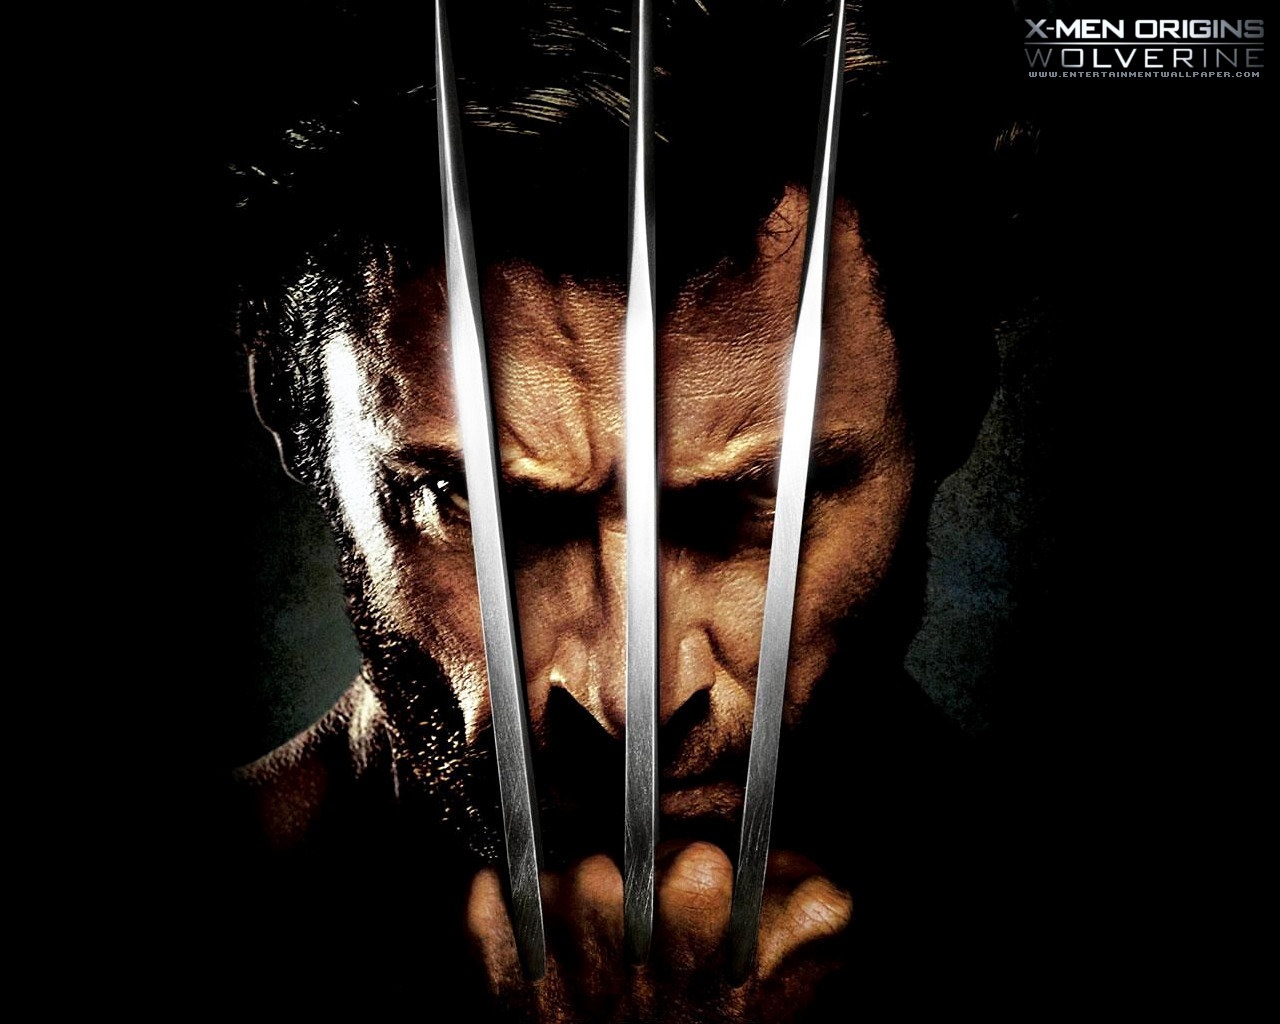 Best X-Men Origins: Wolverine Wallpapers « What's Up?